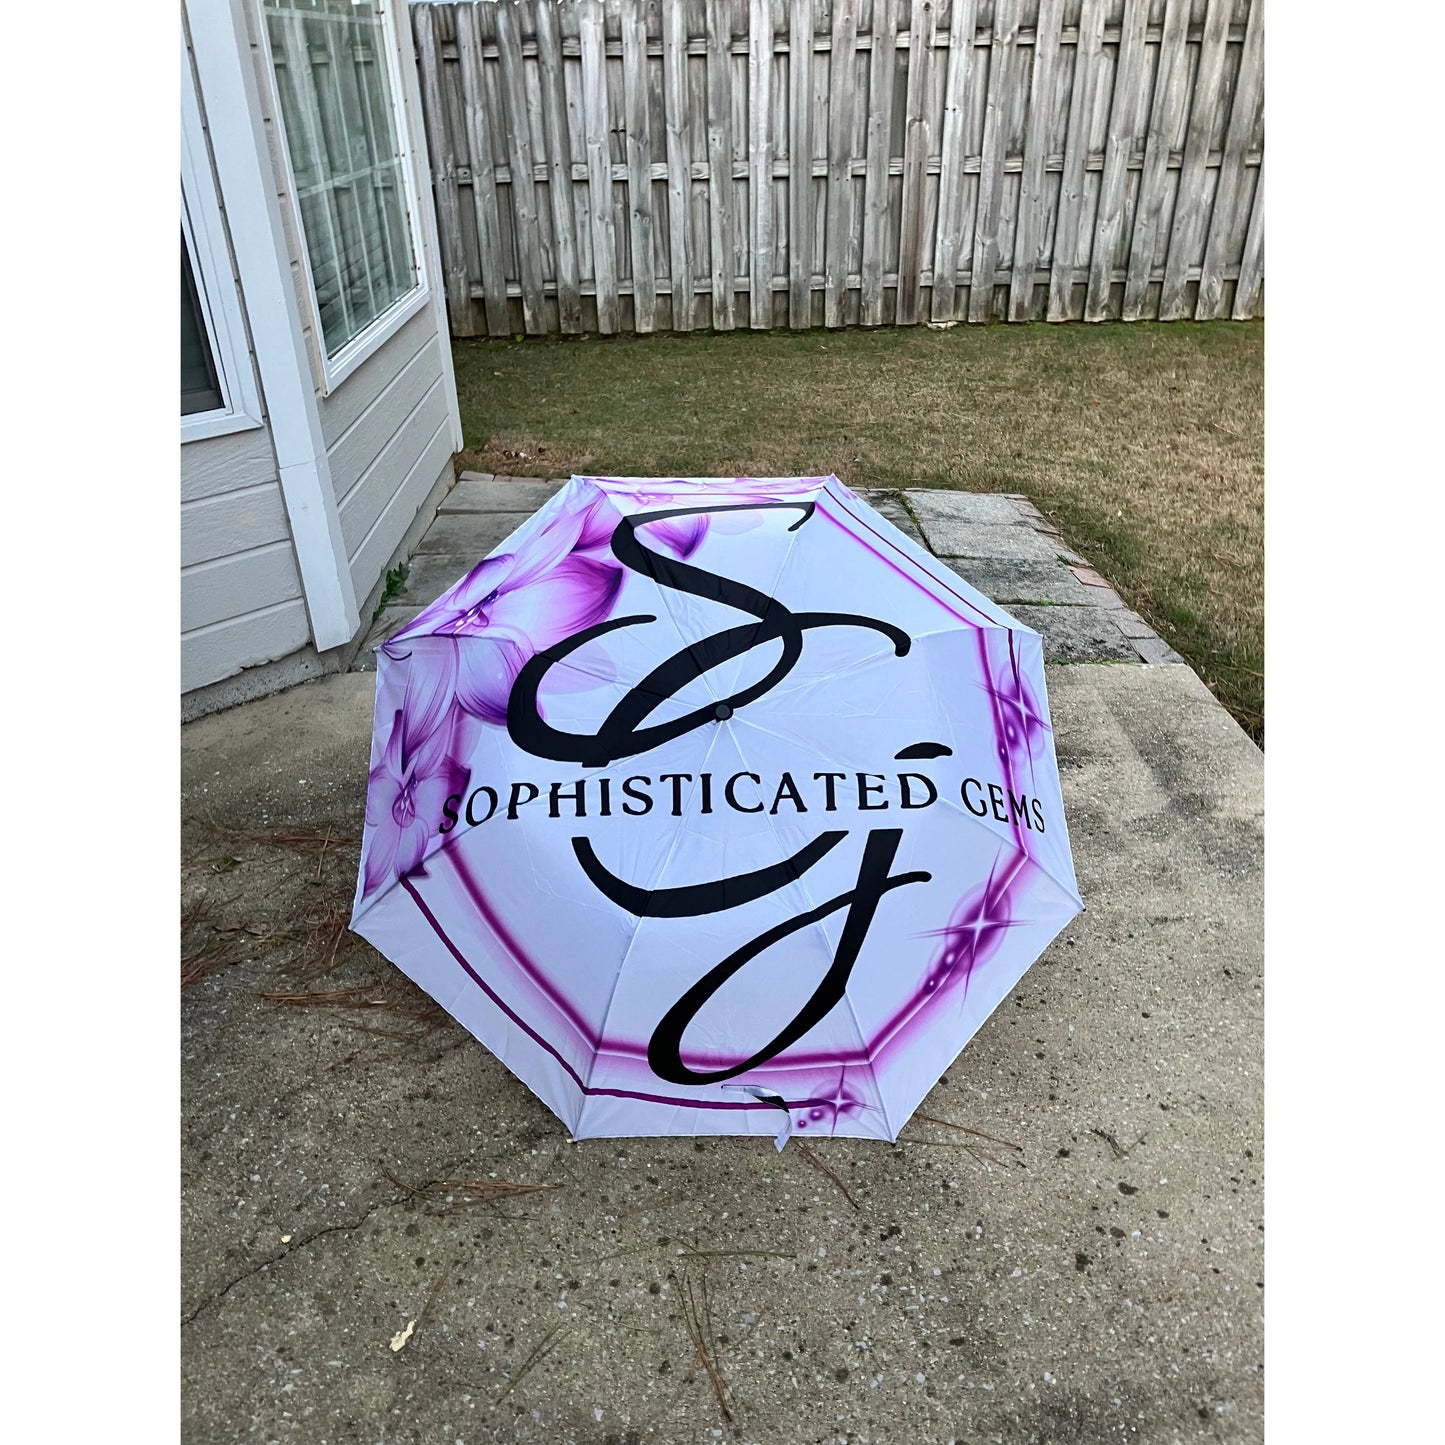 SOPHISTICATED GEMS Umbrella 1 Semi-Automatic Foldable Umbrella